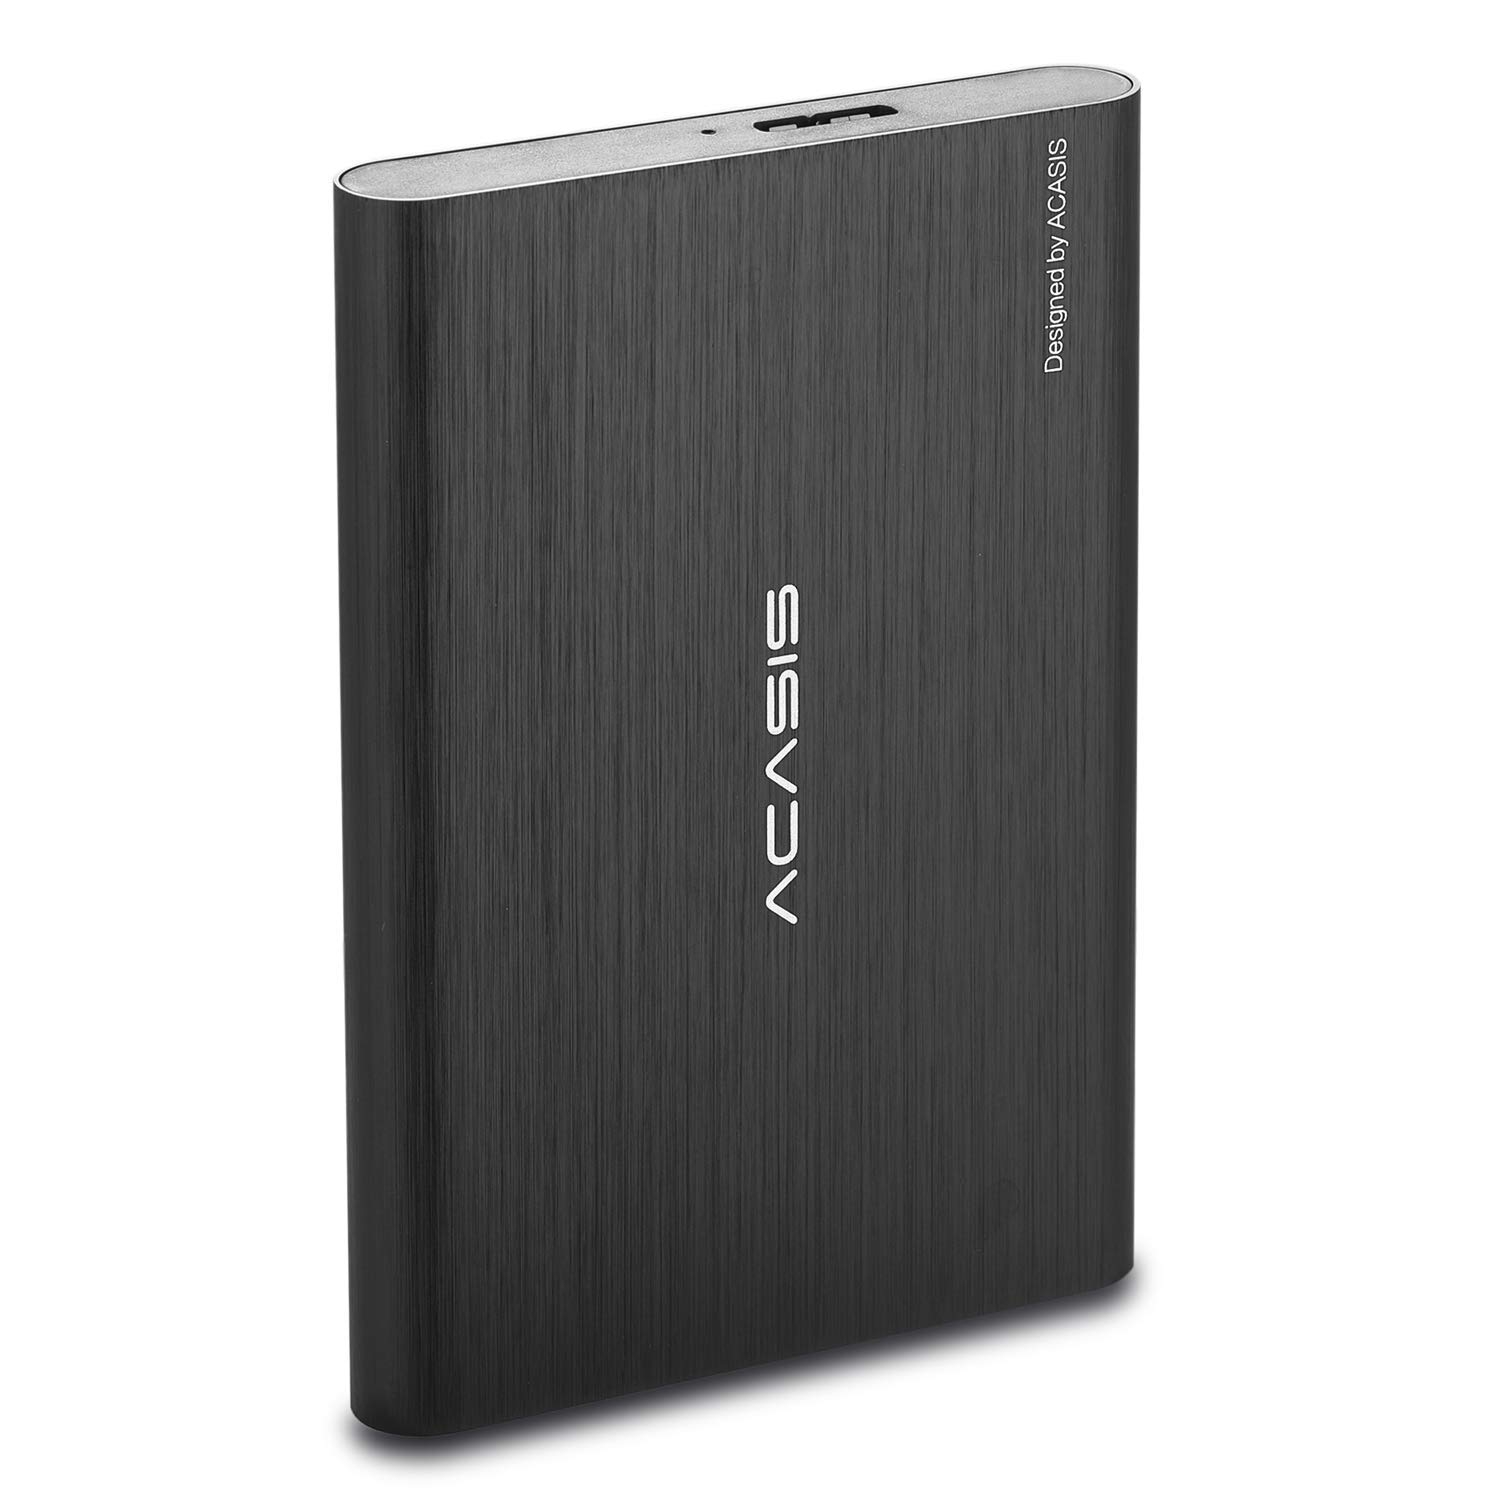 ACASIS USB3.0 2.5 Portable External Hard Drive 320GB Hard Drive for Desktop Laptop HDD (320GB)